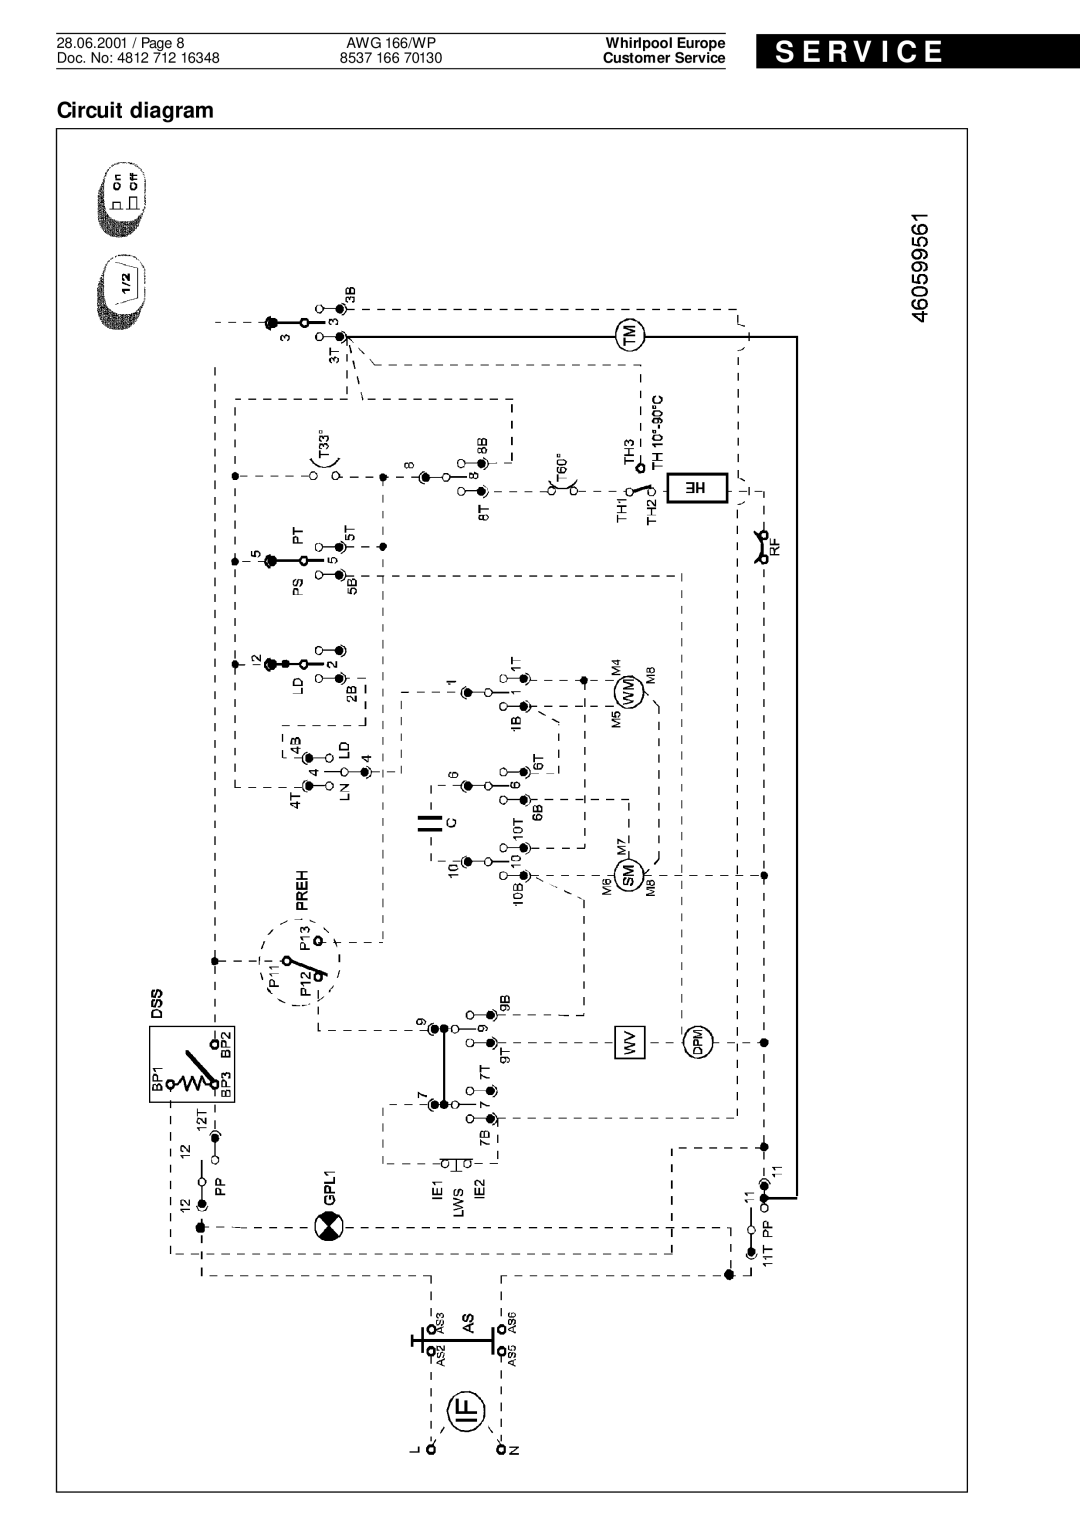 Whirlpool AWG 166 wp service manual Circuit diagram, S E R V I C E, Whirlpool Europe, Customer Service 